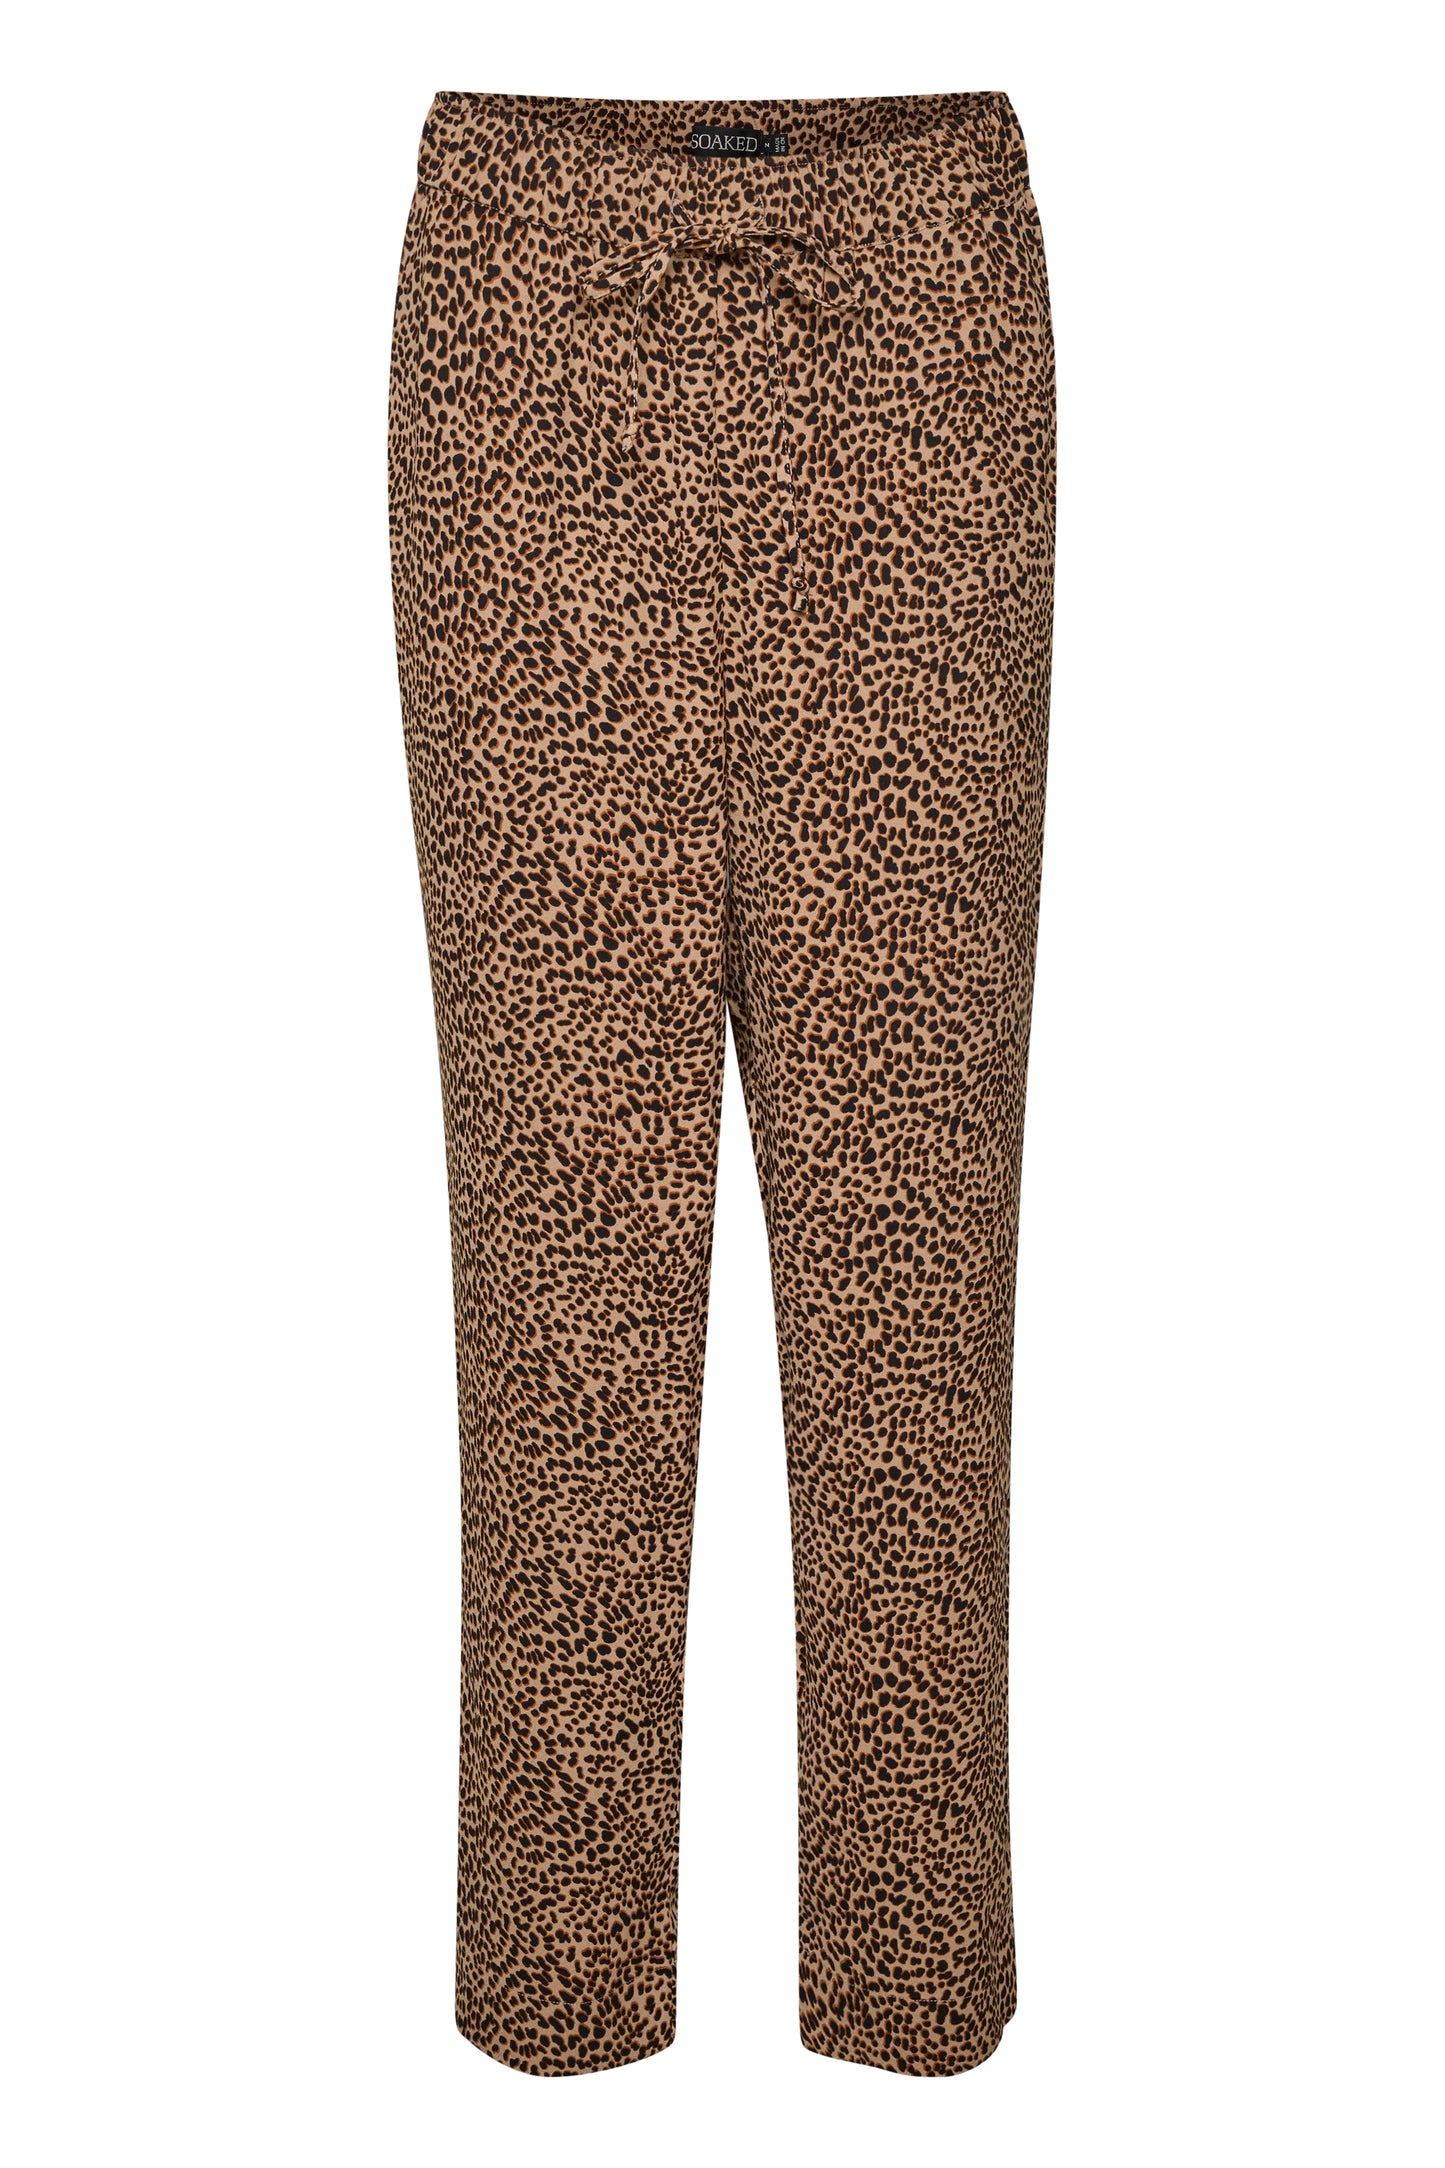 Soaked in Luxury Shirley Printed Pants Trousers Tigers Eye Mini Leopard Print